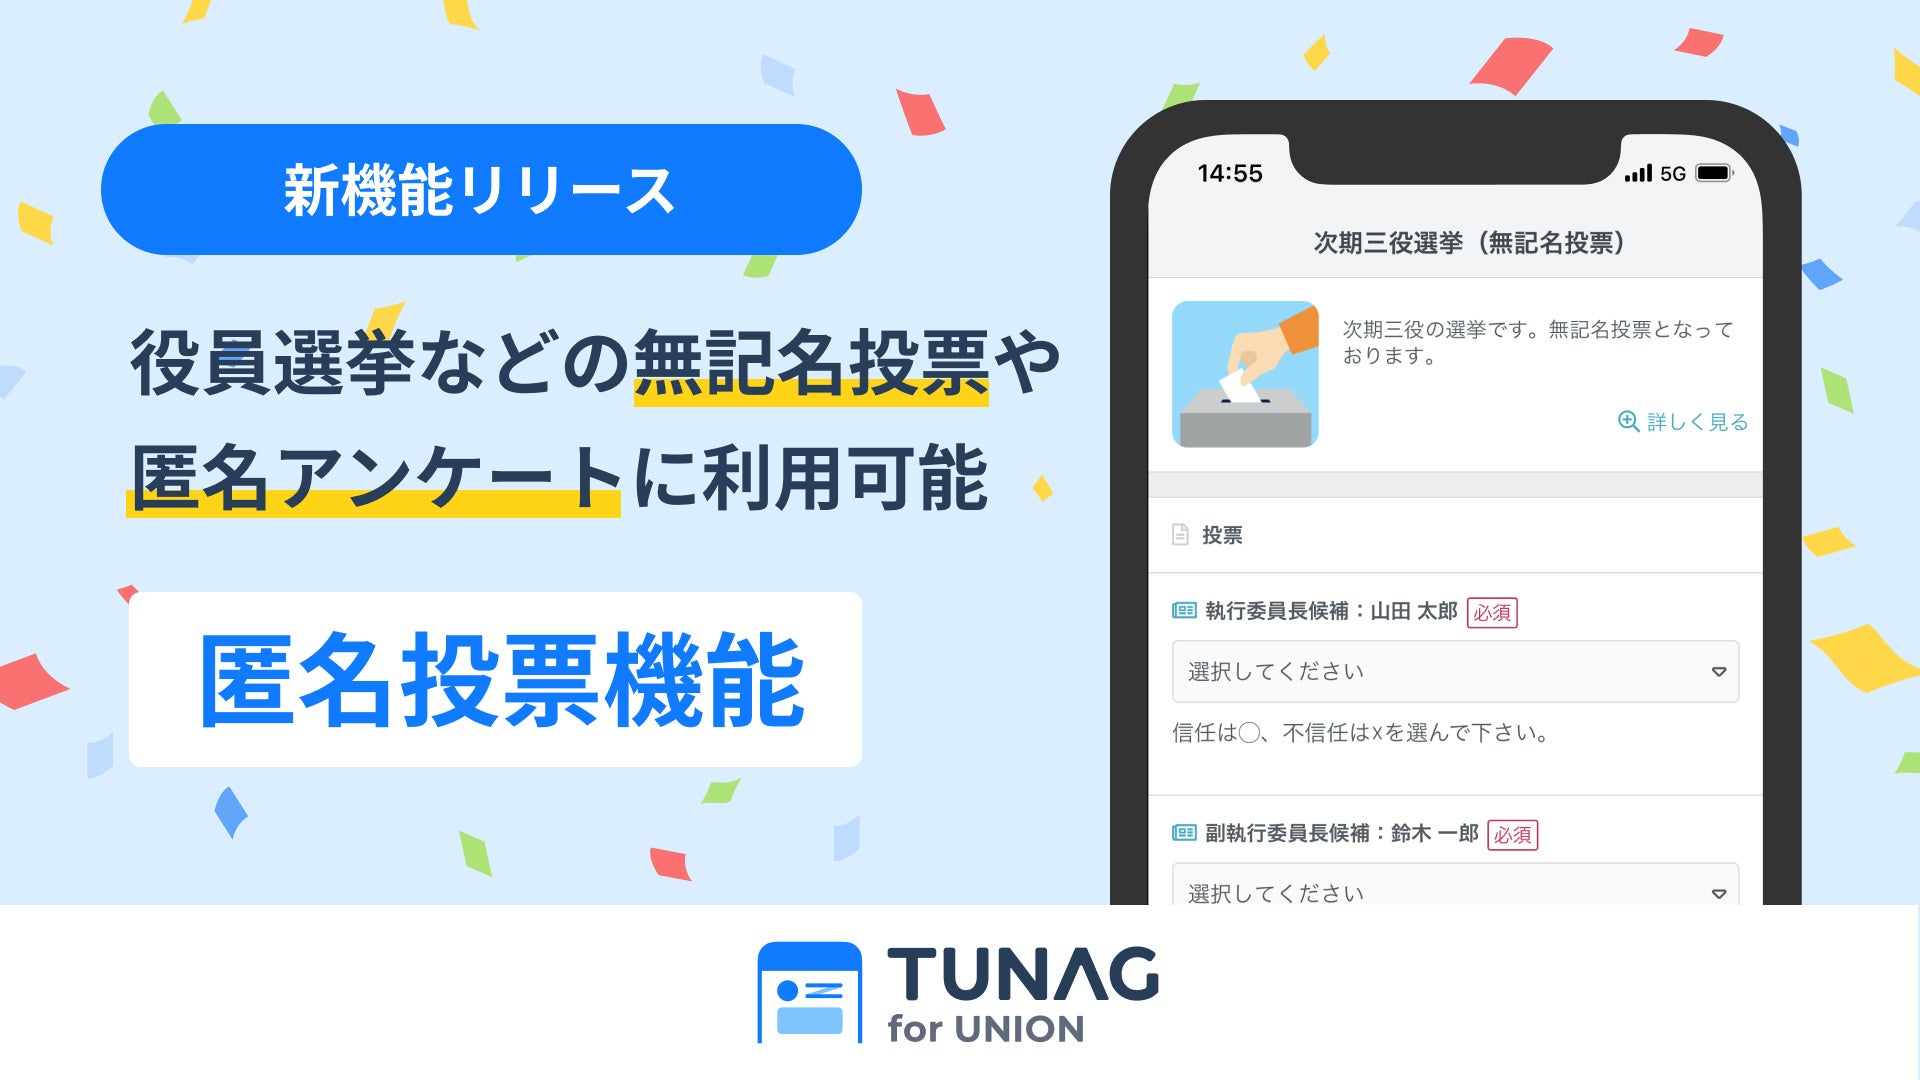 TUNAG for UNION 新機能 匿名投票をリリース。無記名での役員選挙の投票やアンケート回収に利用可能。